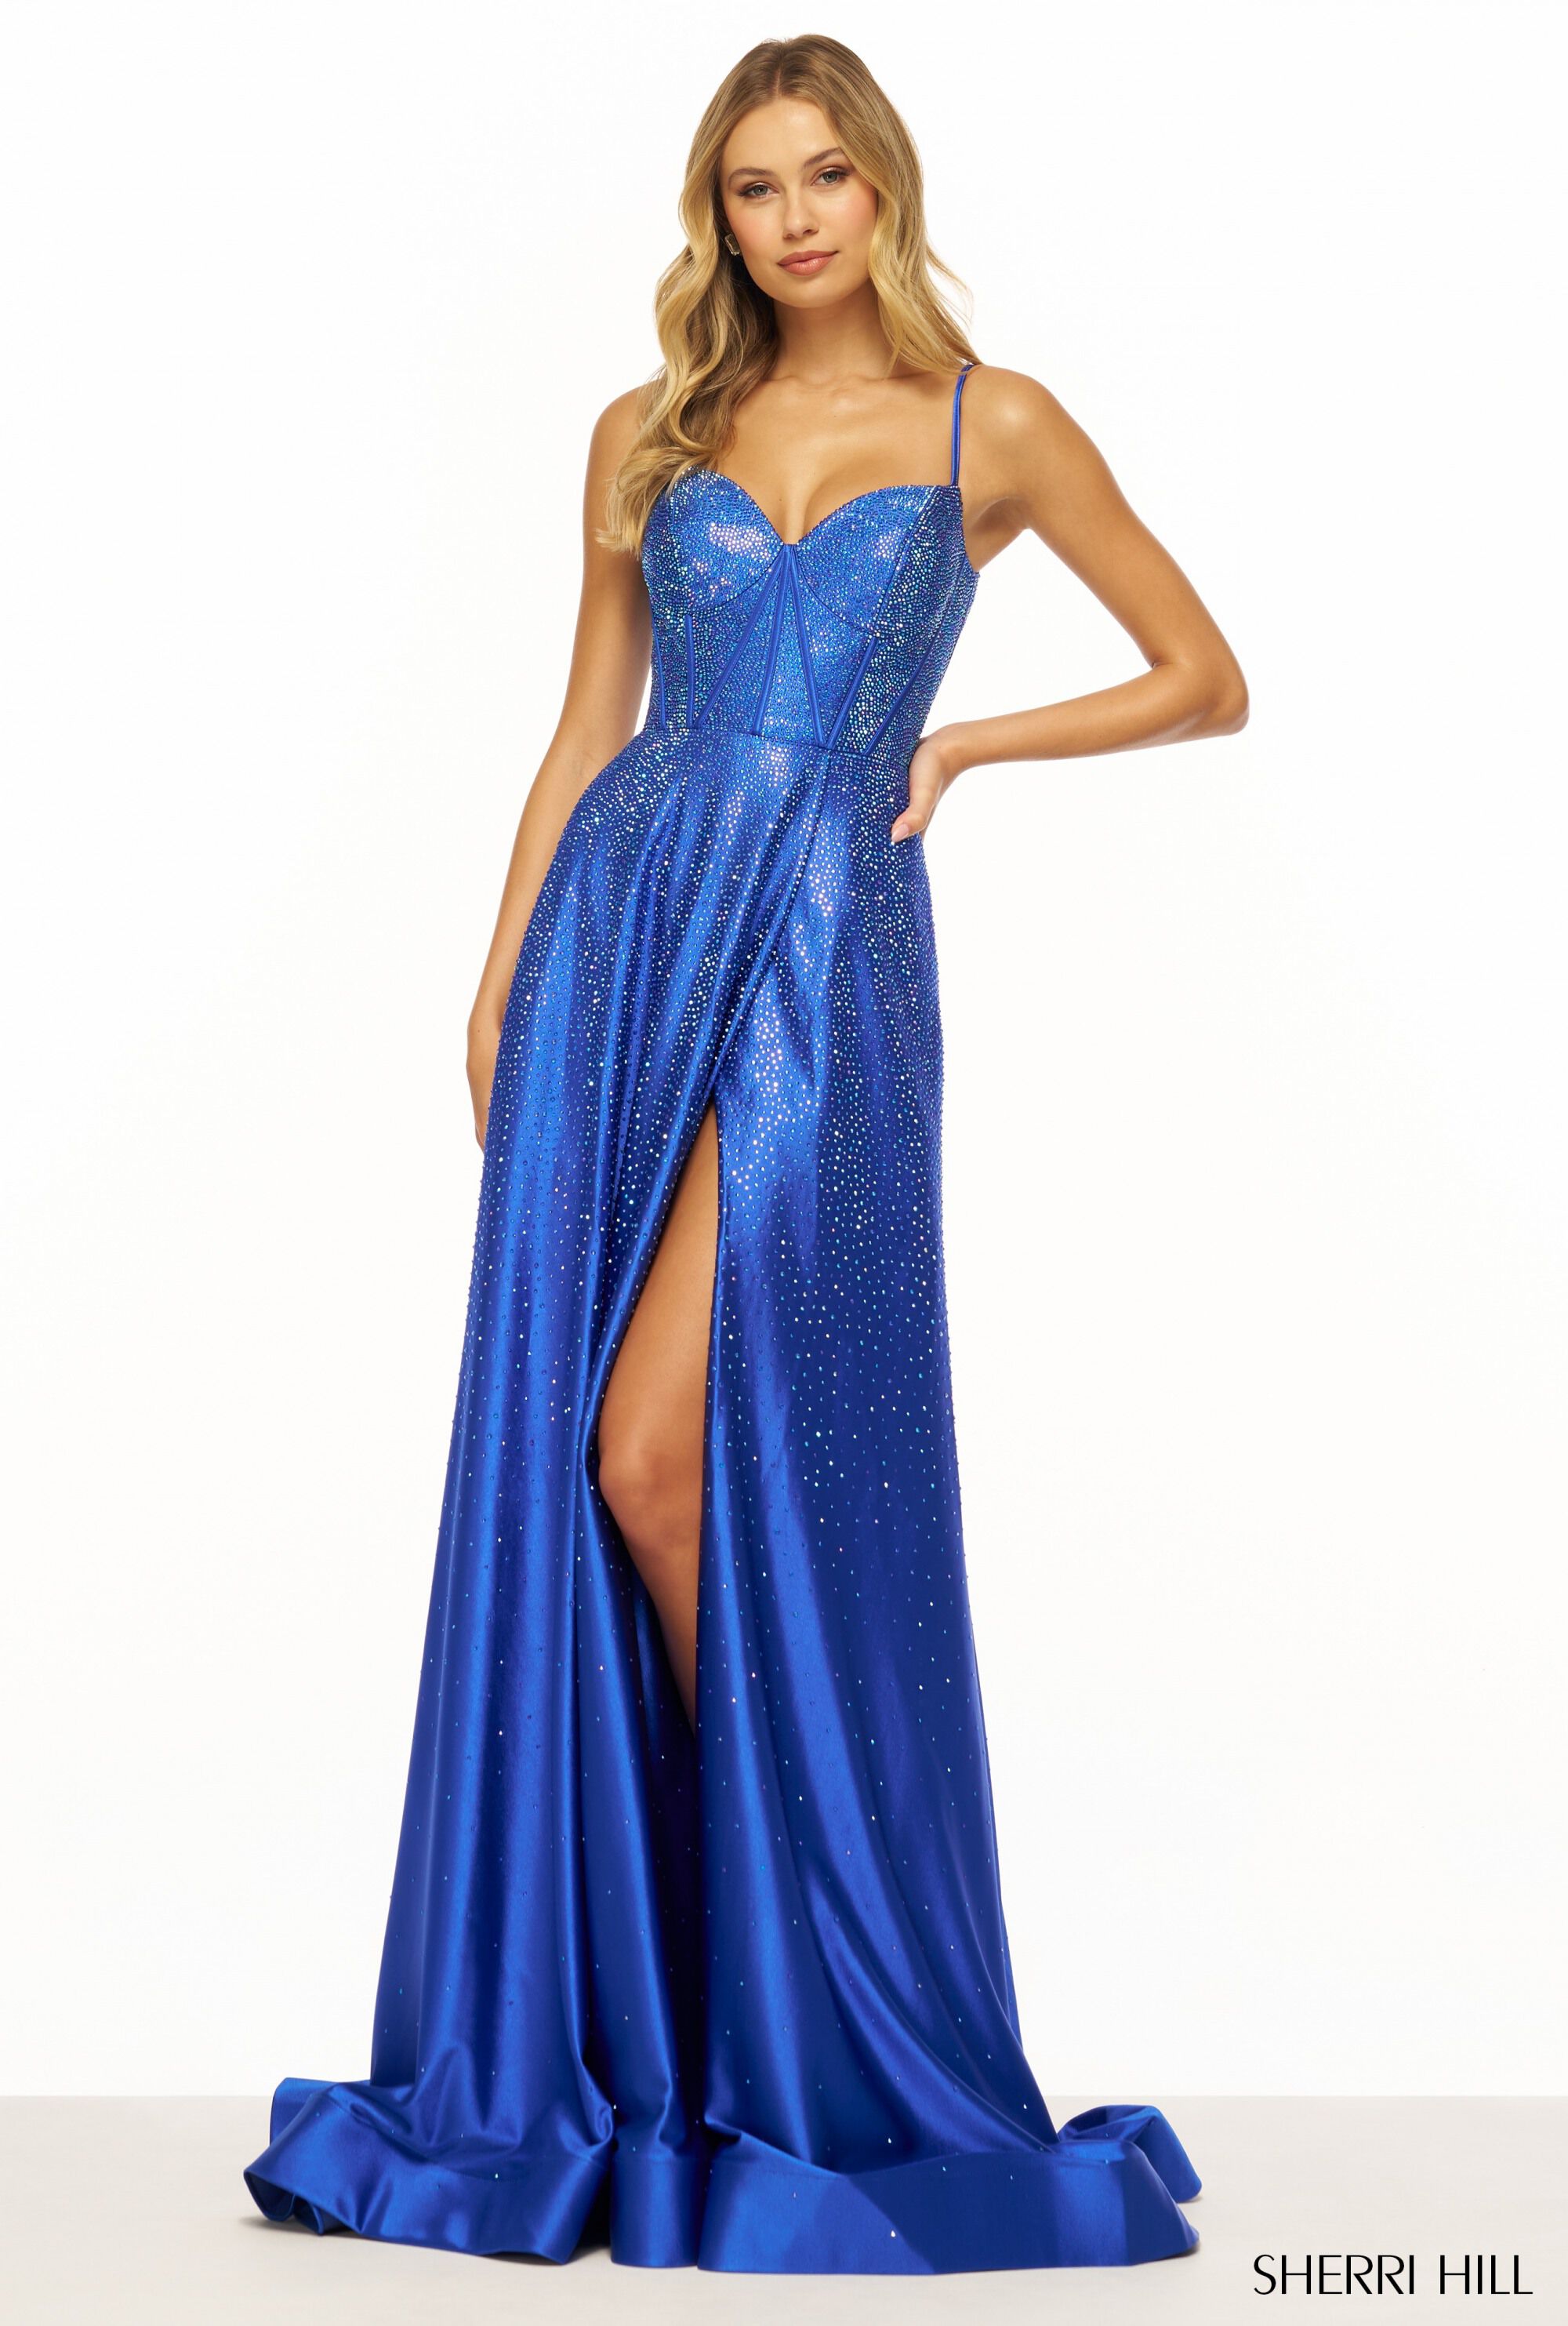 Buy dress style № 56190 designed by SherriHill